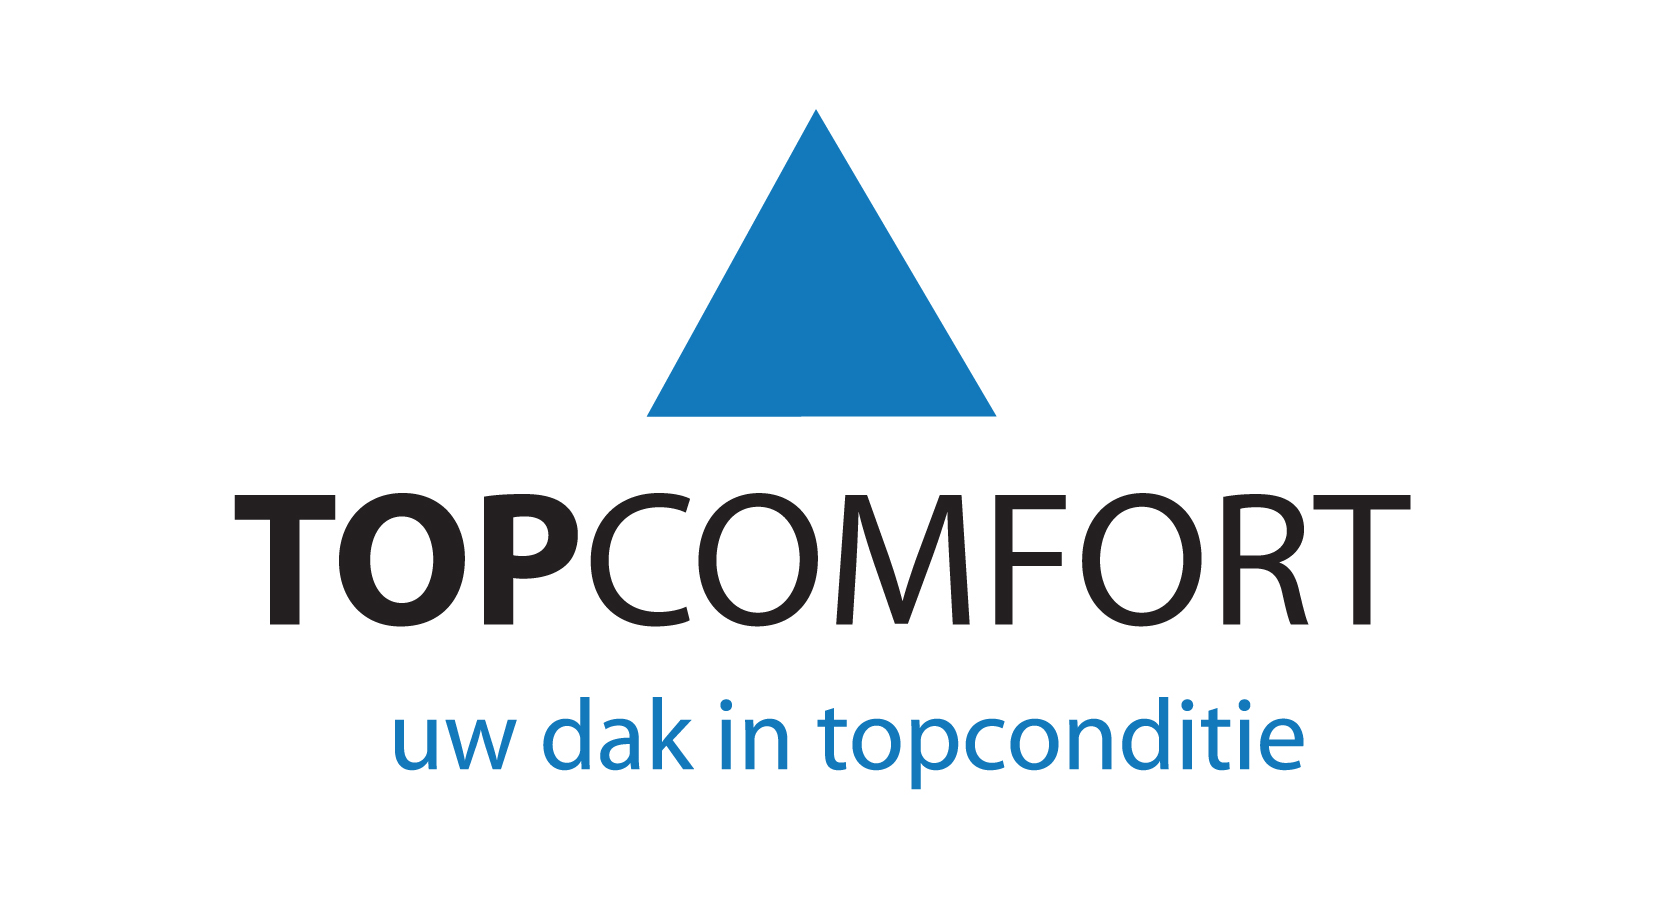 Topcomfort